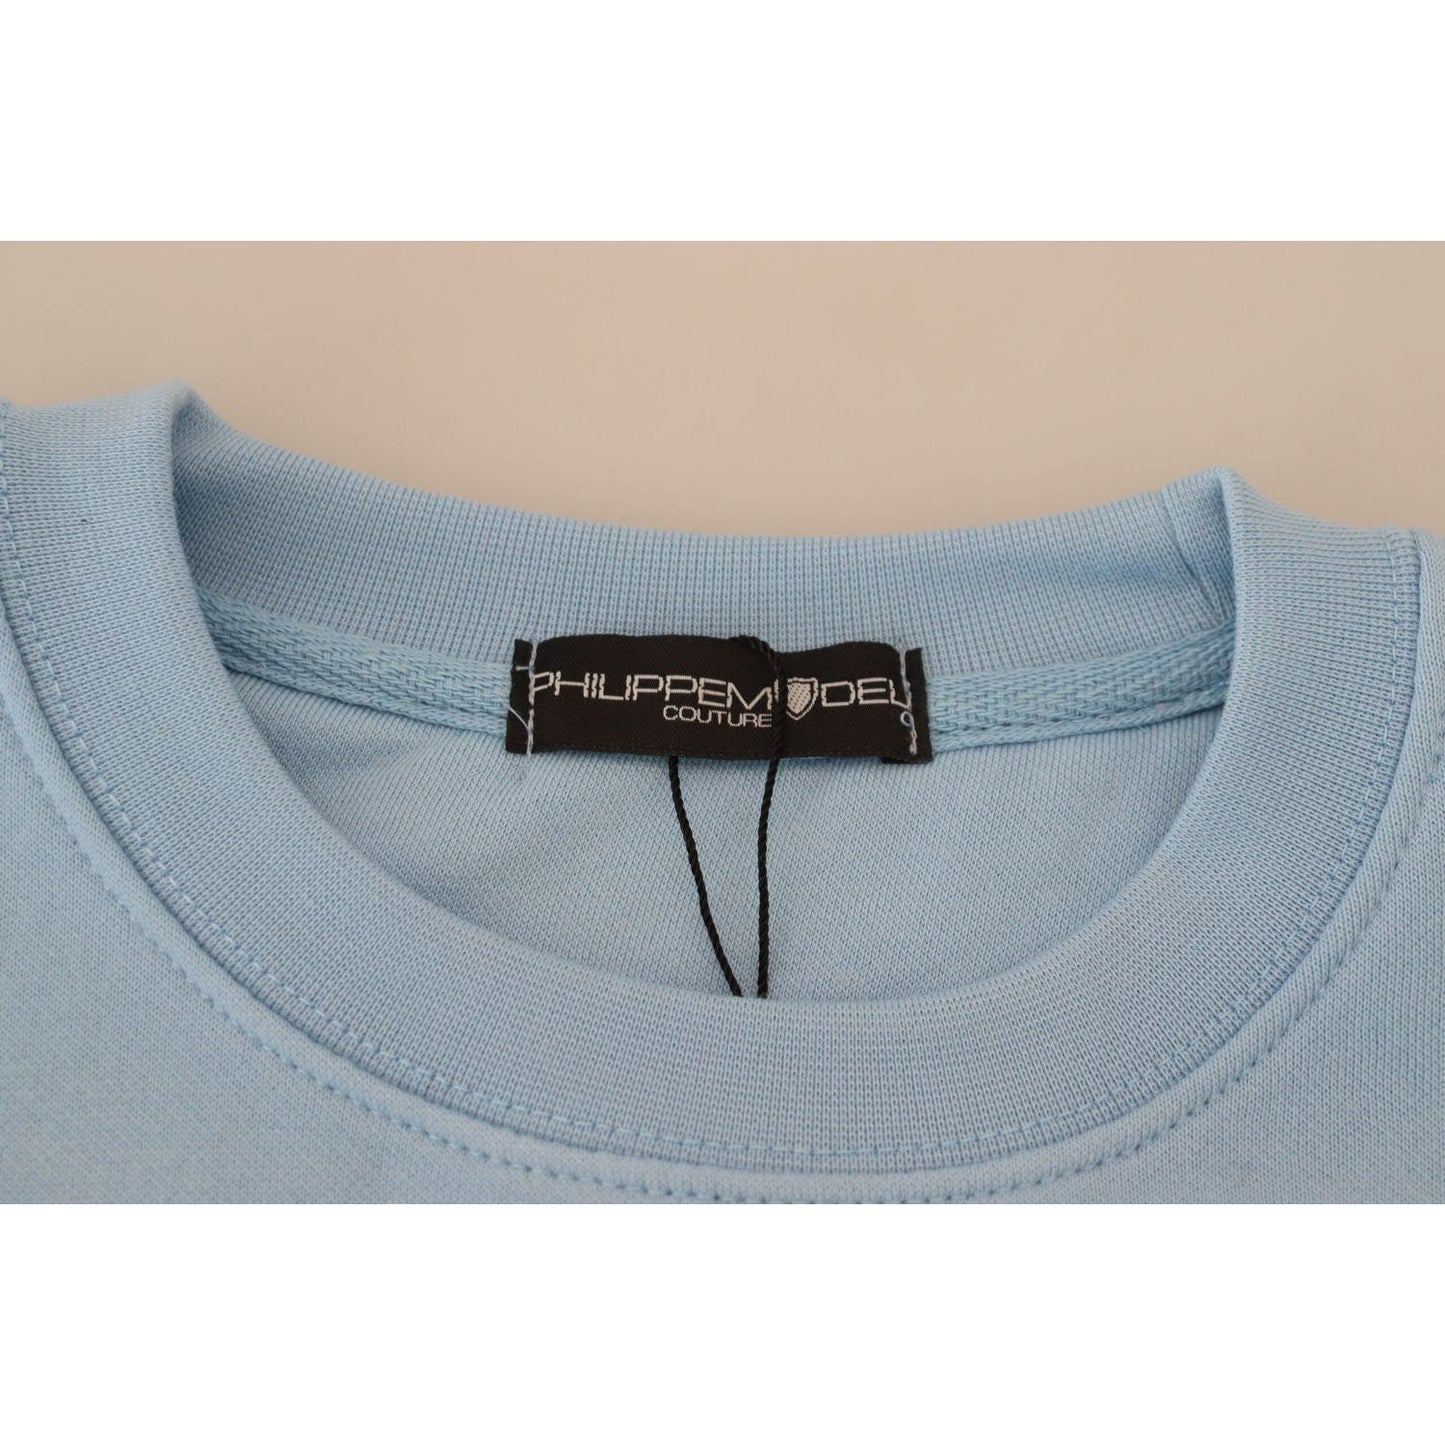 Philippe Model Chic Light Blue Logo Embellished Sweater light-blue-logo-printed-long-sleeves-sweater IMG_9230-scaled-8102c867-2f5.jpg